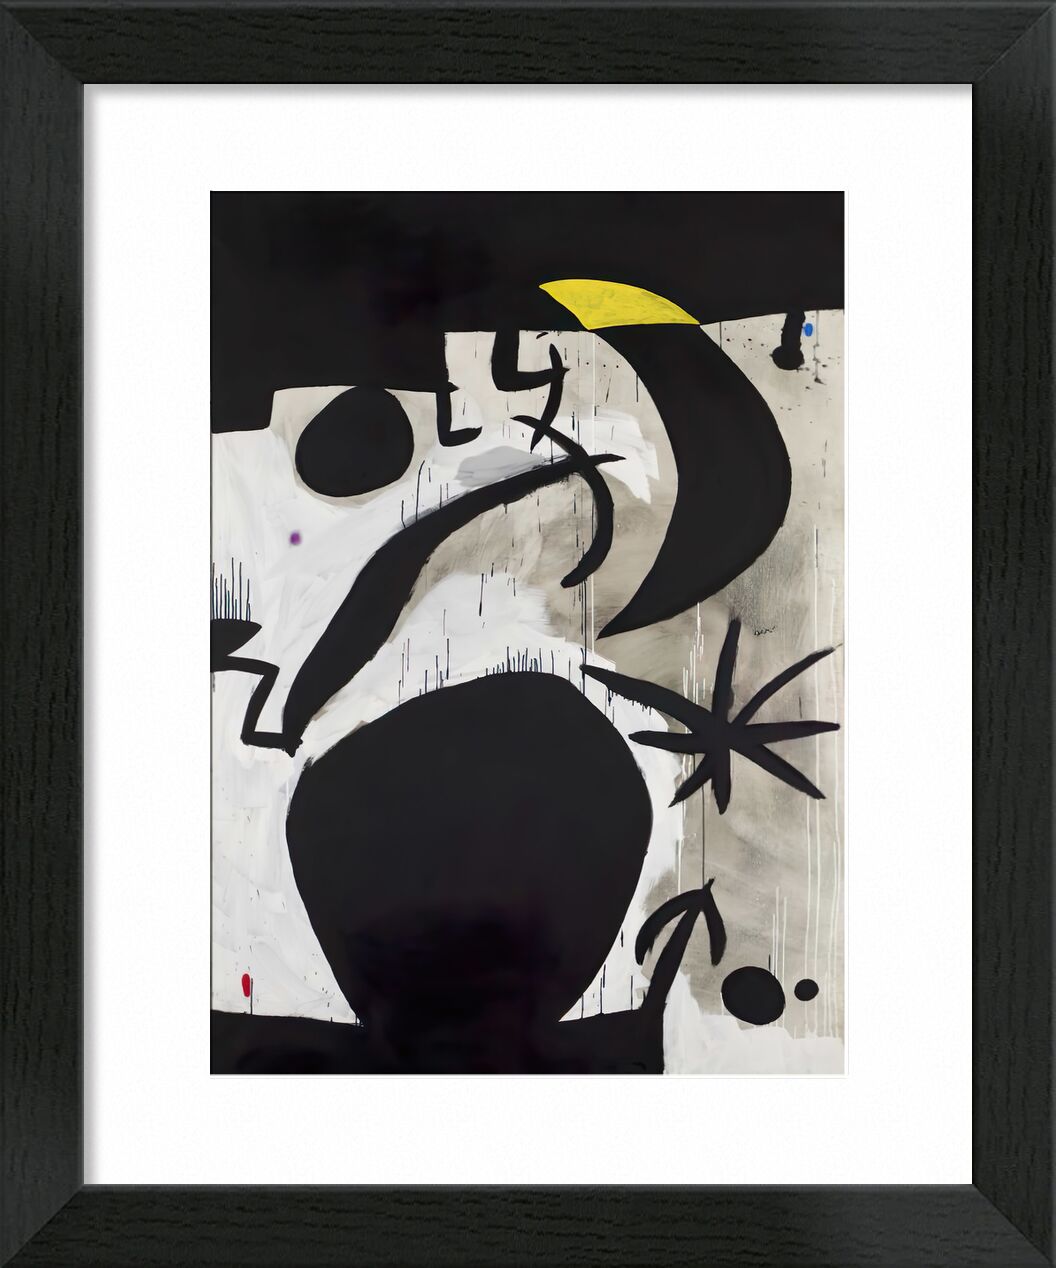 Women and Birds in the Night, 1969 - 1974 - Joan Miró desde Bellas artes, Prodi Art, póster, abstracto, pintura, Joan Miró